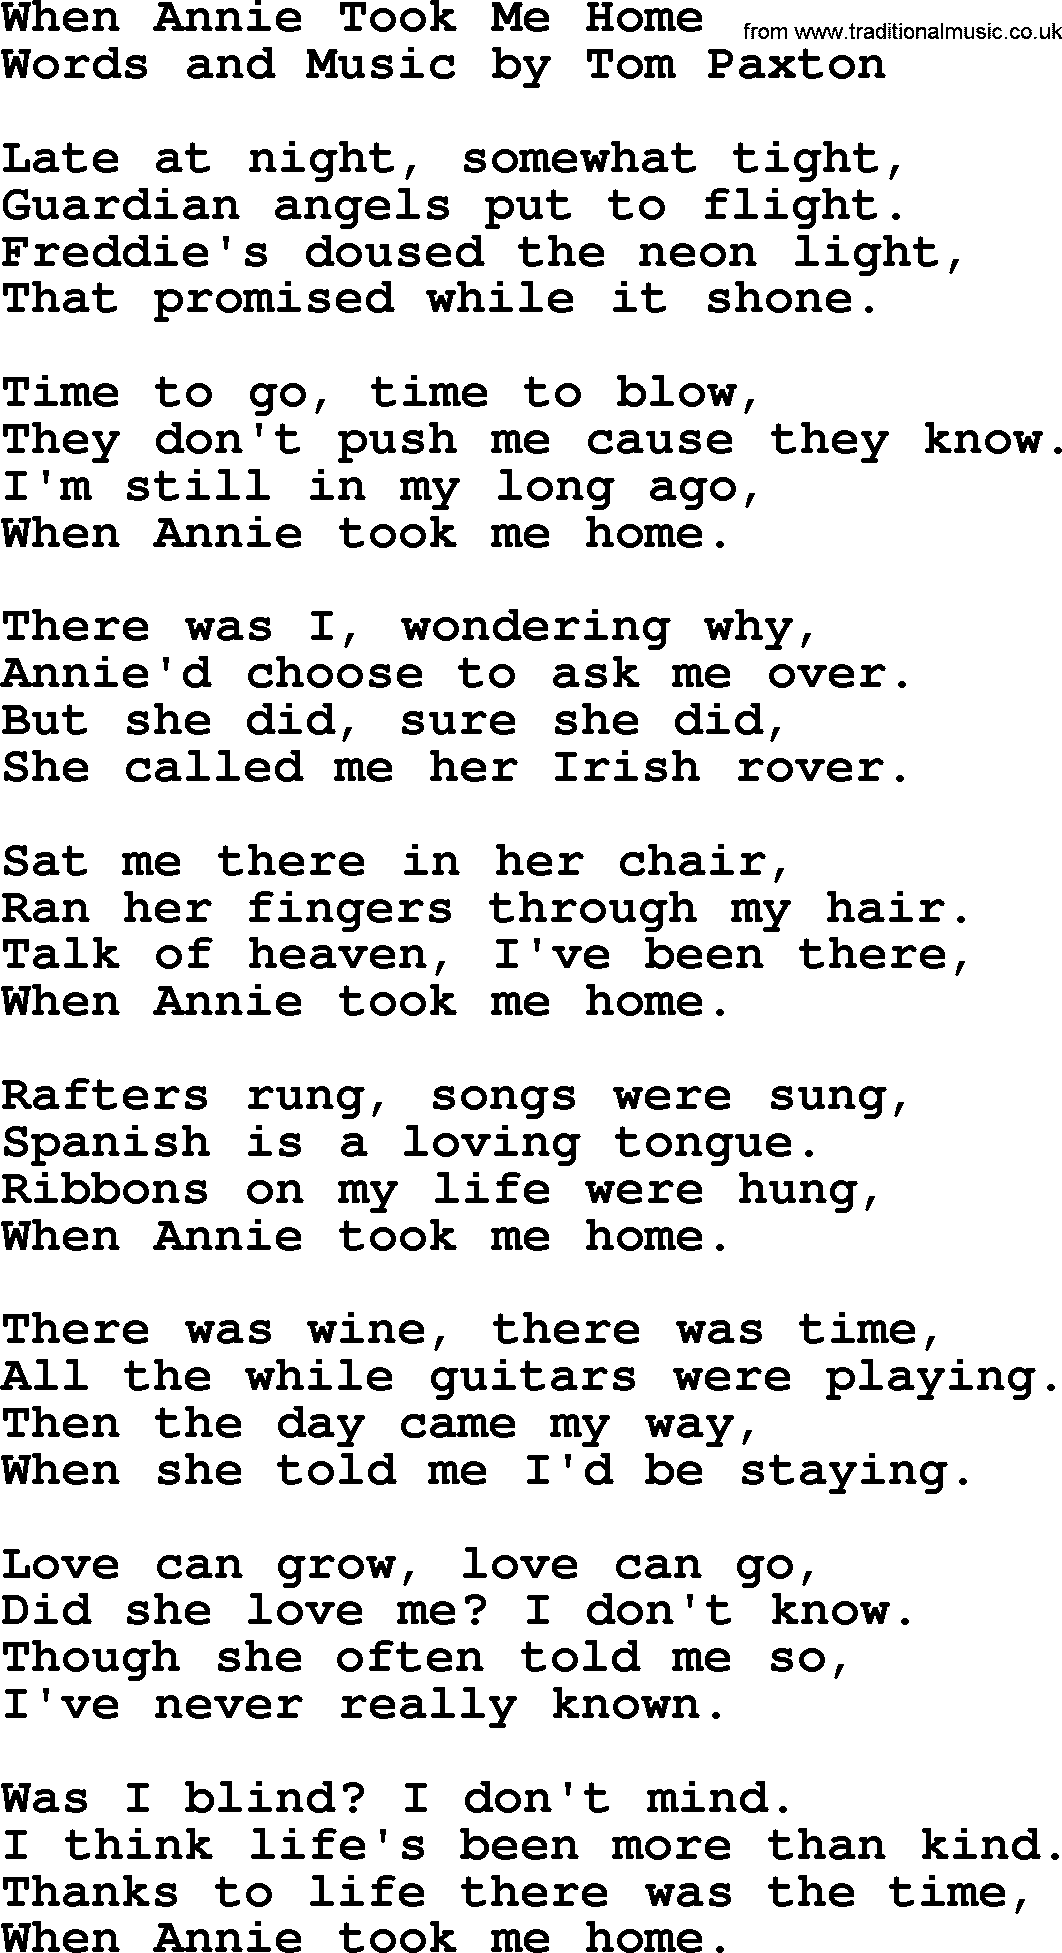 Tom Paxton song: When Annie Took Me Home, lyrics